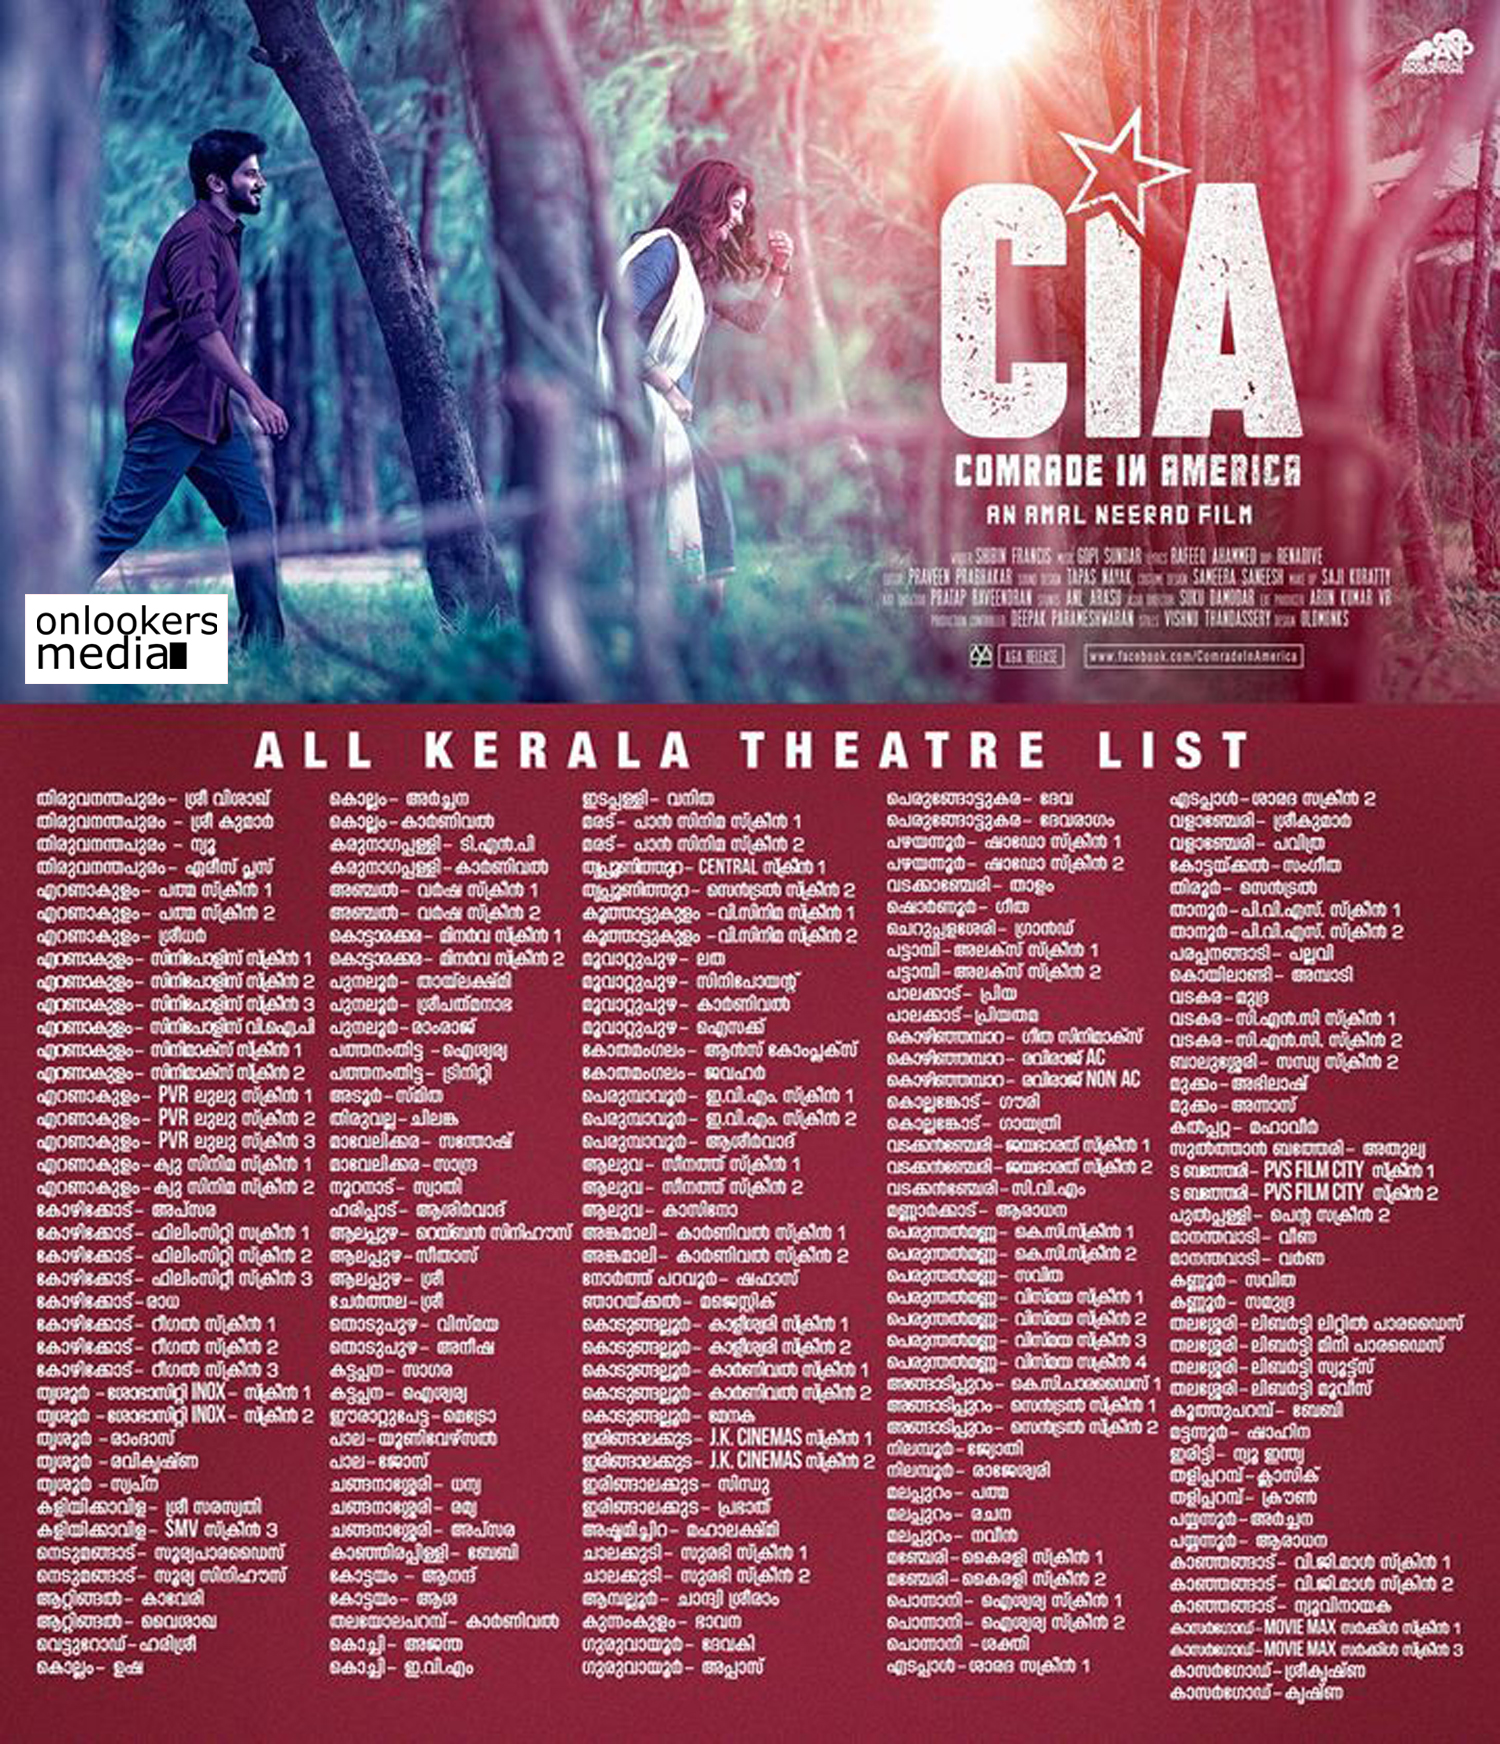 CIA theatre list, CIA malayalam movie, comrade in america, malayalam movie 2017, dulquer next movie, dulquer amal neerad, cia outside kerala theatre list